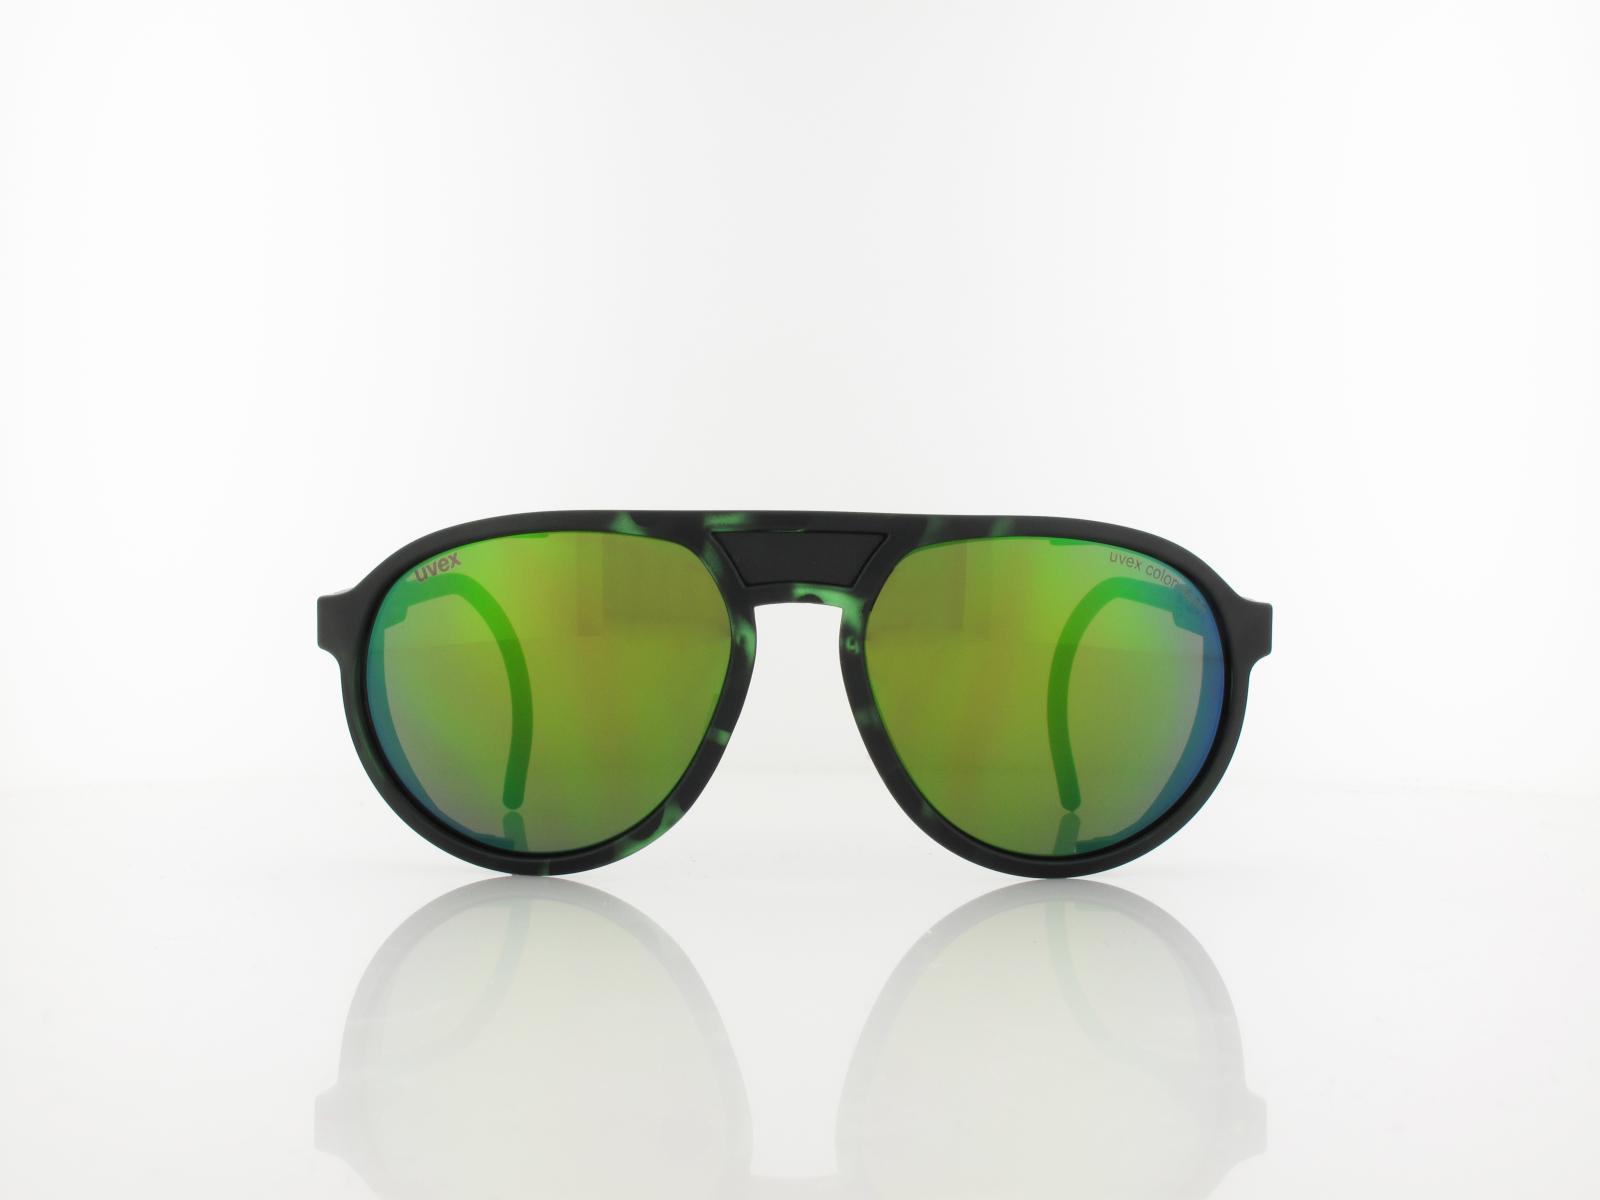 UVEX | mtn classic CV S533034 7770 59 | green matt tortoise / colorvision mirror green